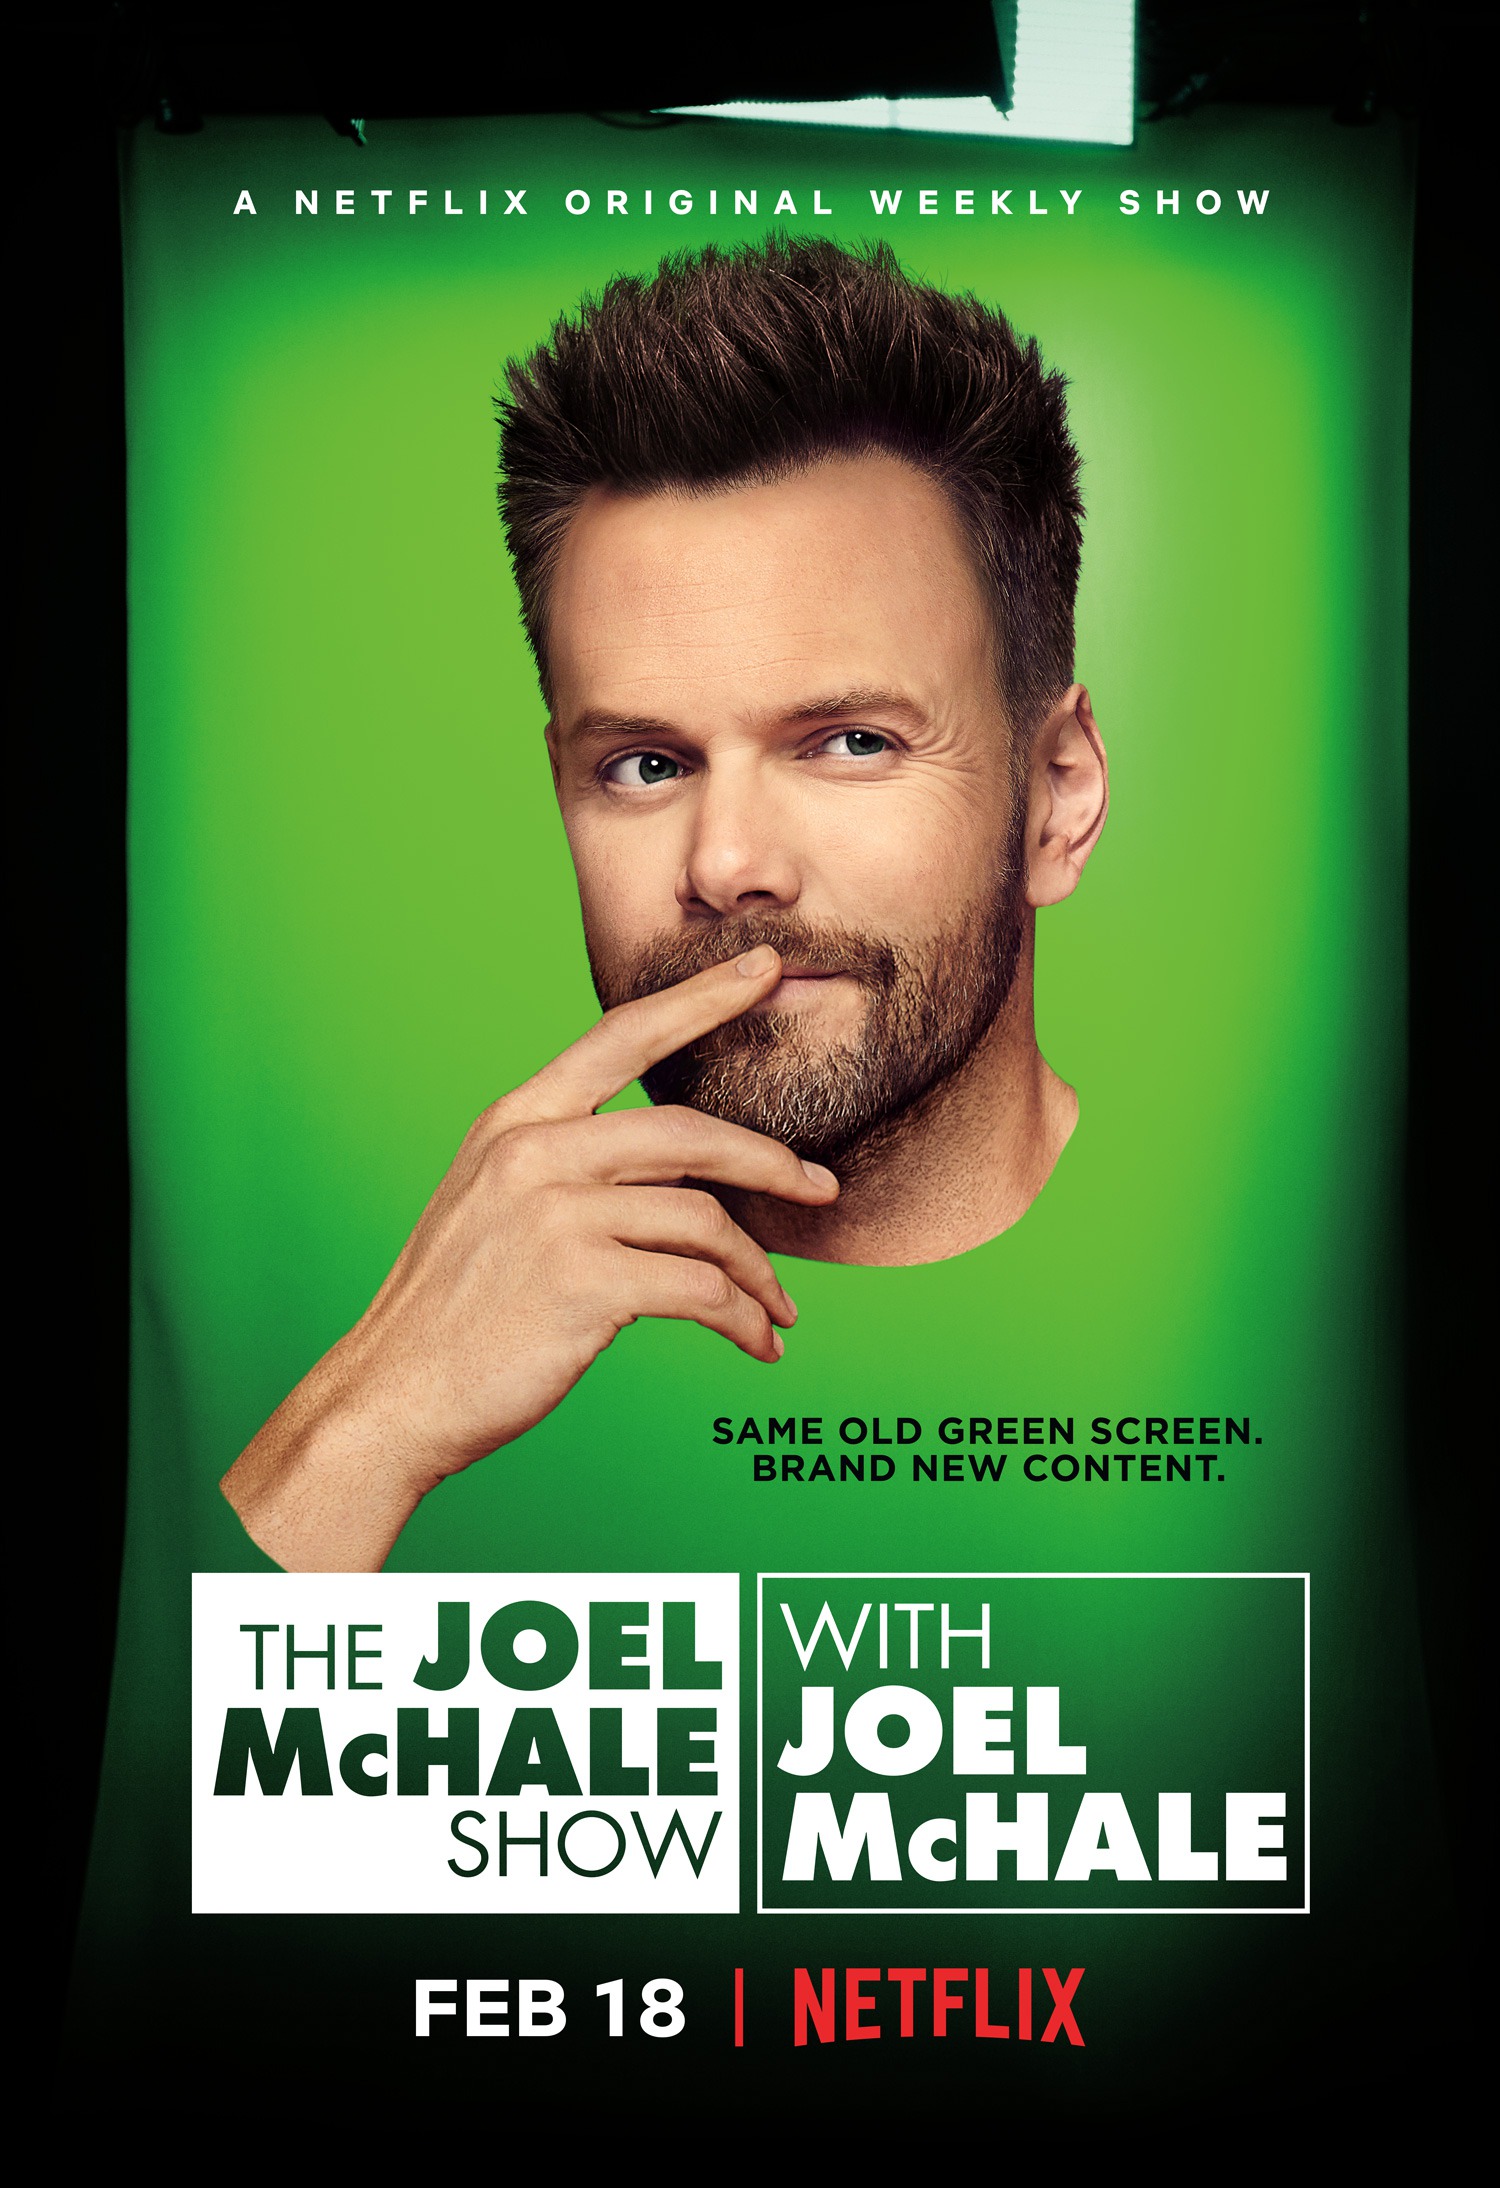 Mega Sized TV Poster Image for The Joel McHale Show 